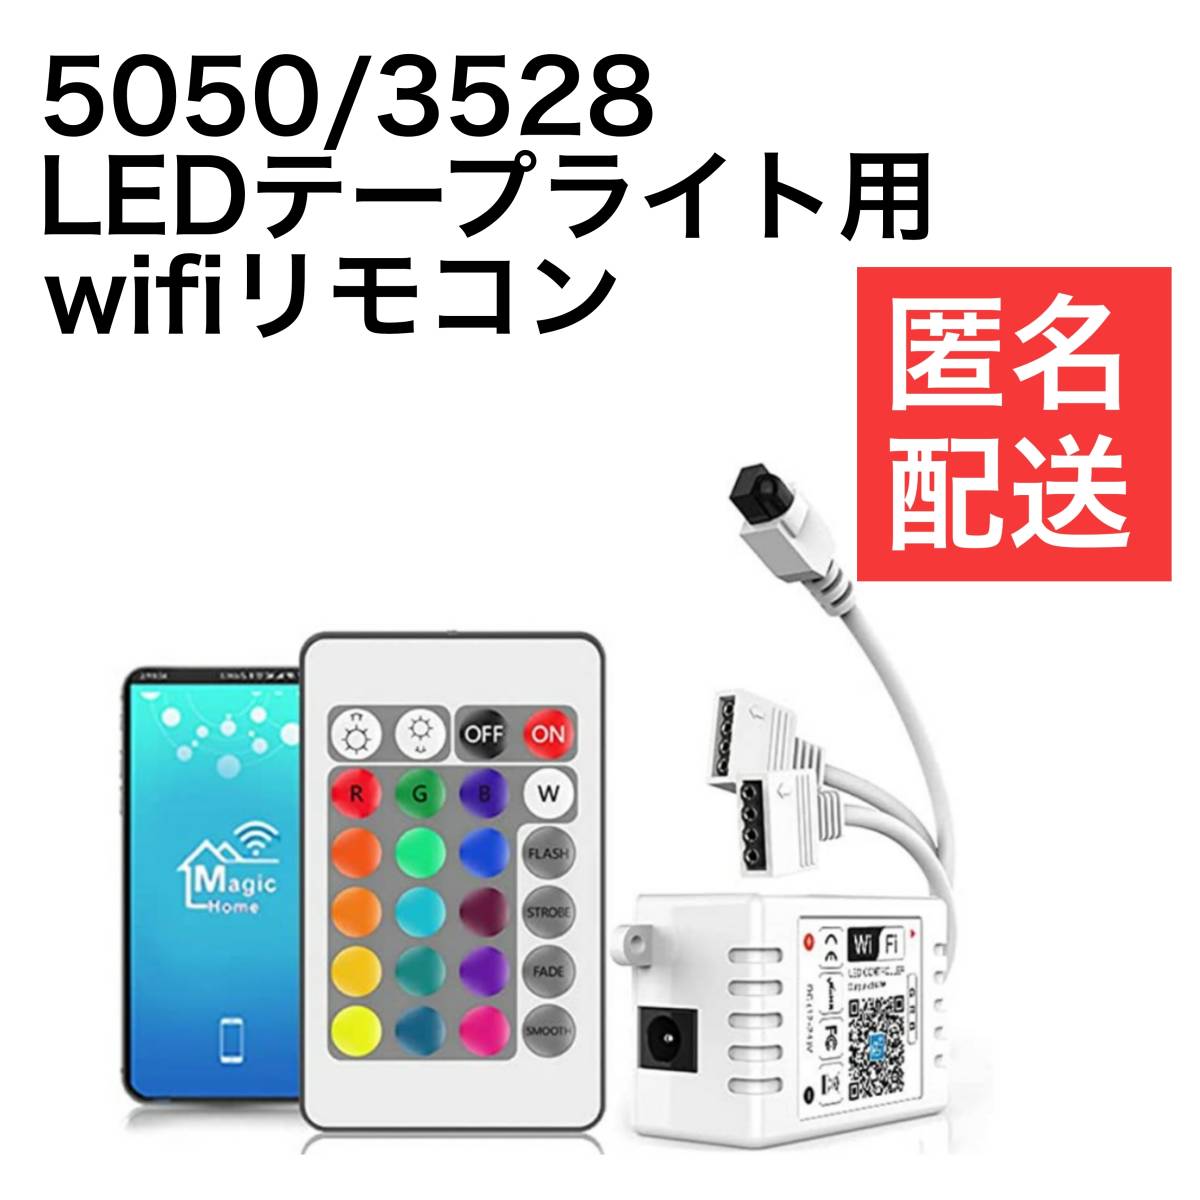 LED tape light WIFI controller RGB 12V-24V 5050/3528 tape lai.. possible to use.24 key RGB controller 